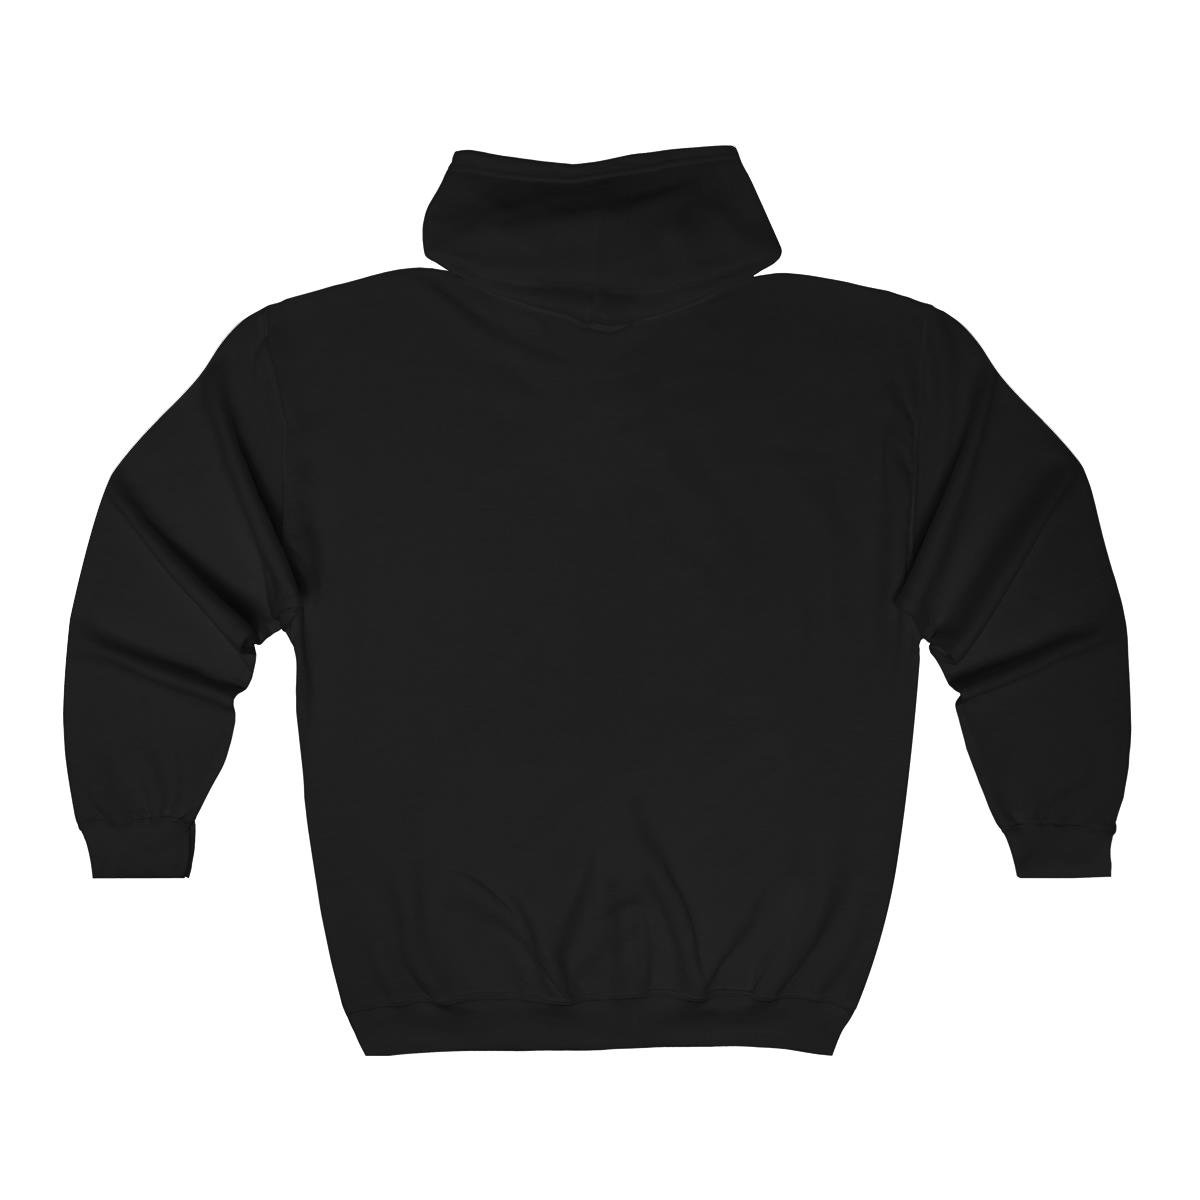 Crumbacher – Tame The Volcano Full Zip Hooded Sweatshirt